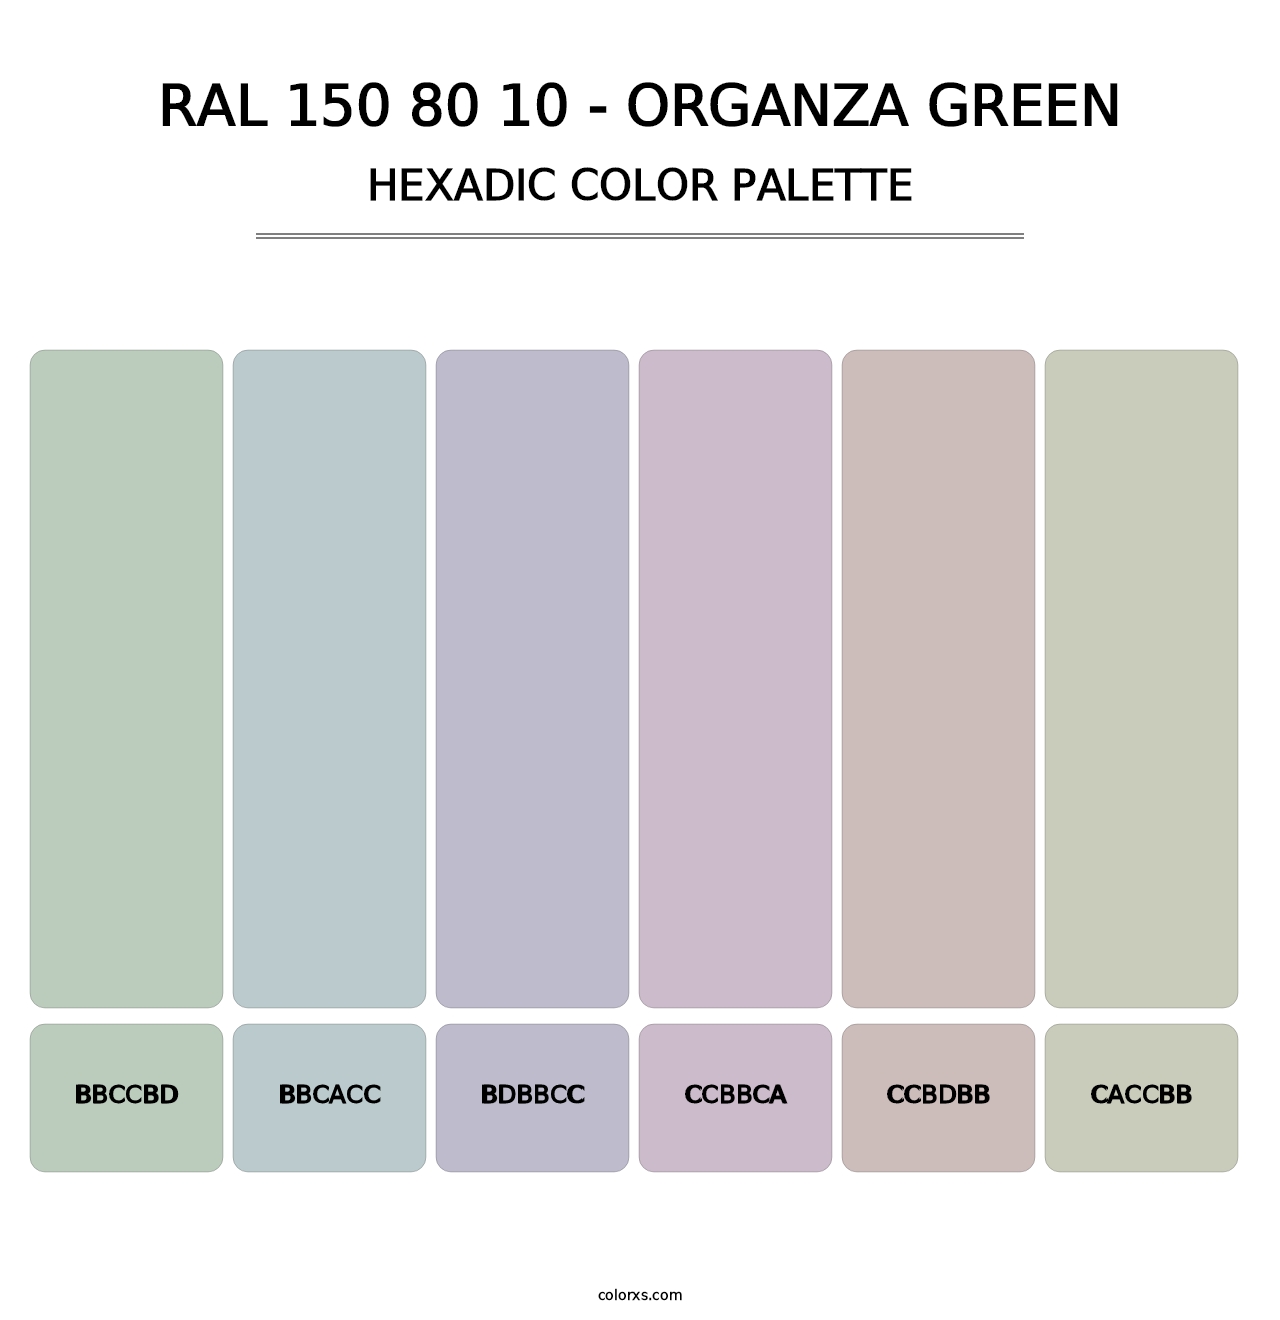 RAL 150 80 10 - Organza Green - Hexadic Color Palette